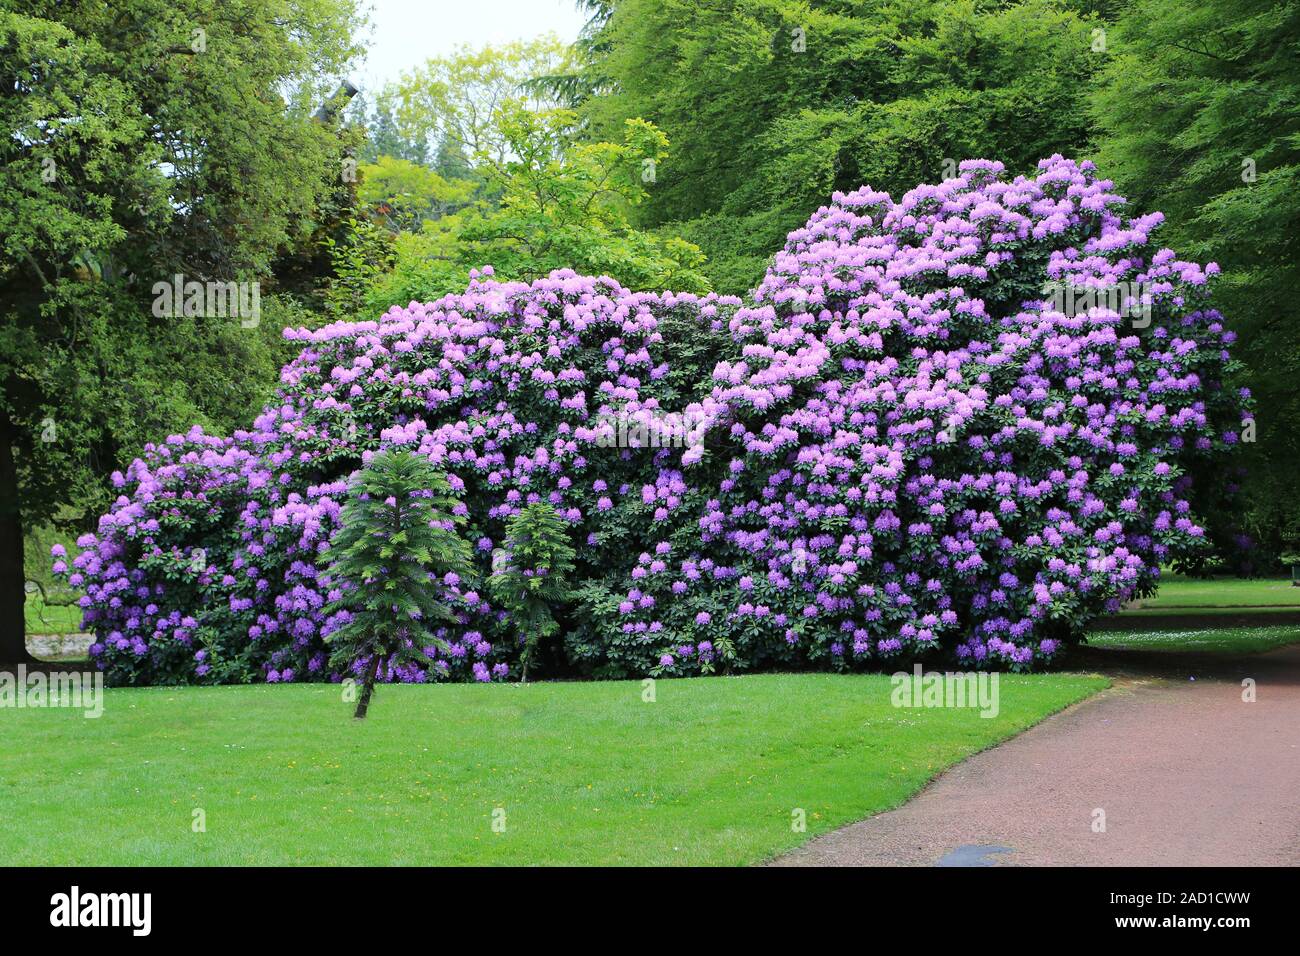 Edinburgh, Royal Botanic Garden, Giant Rhododendron Stock Photo